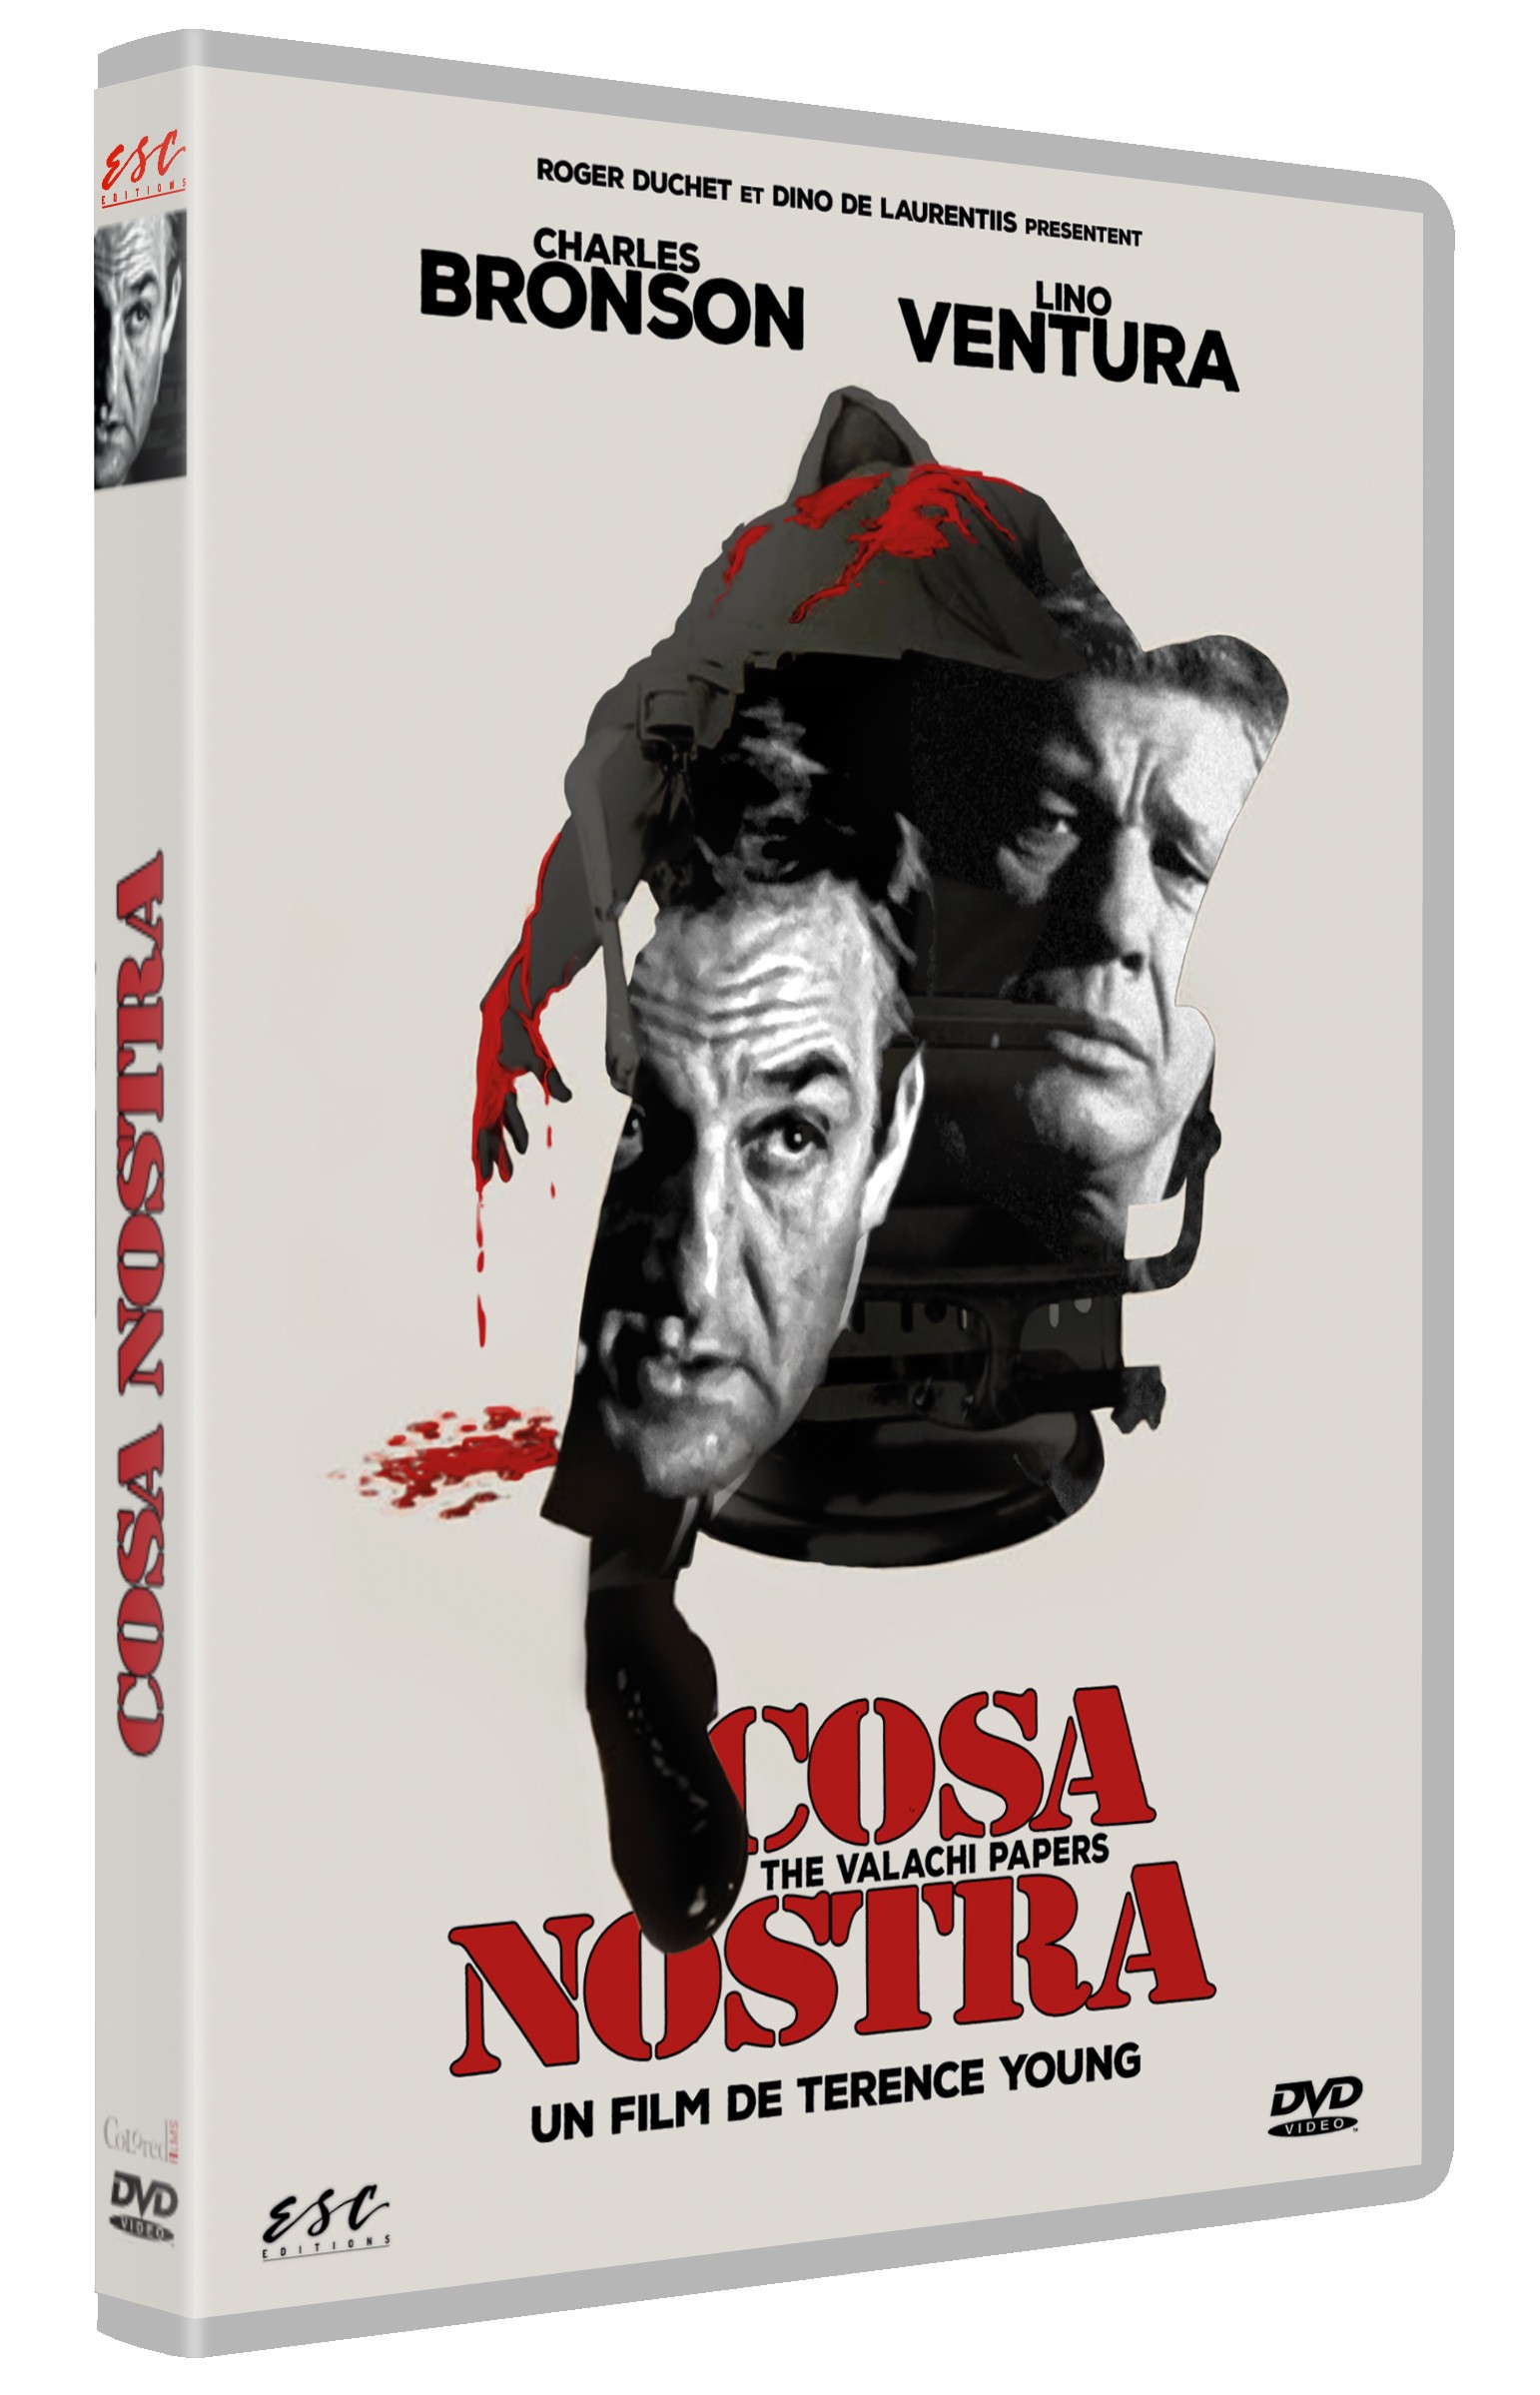 COSA NOSTRA - DVD